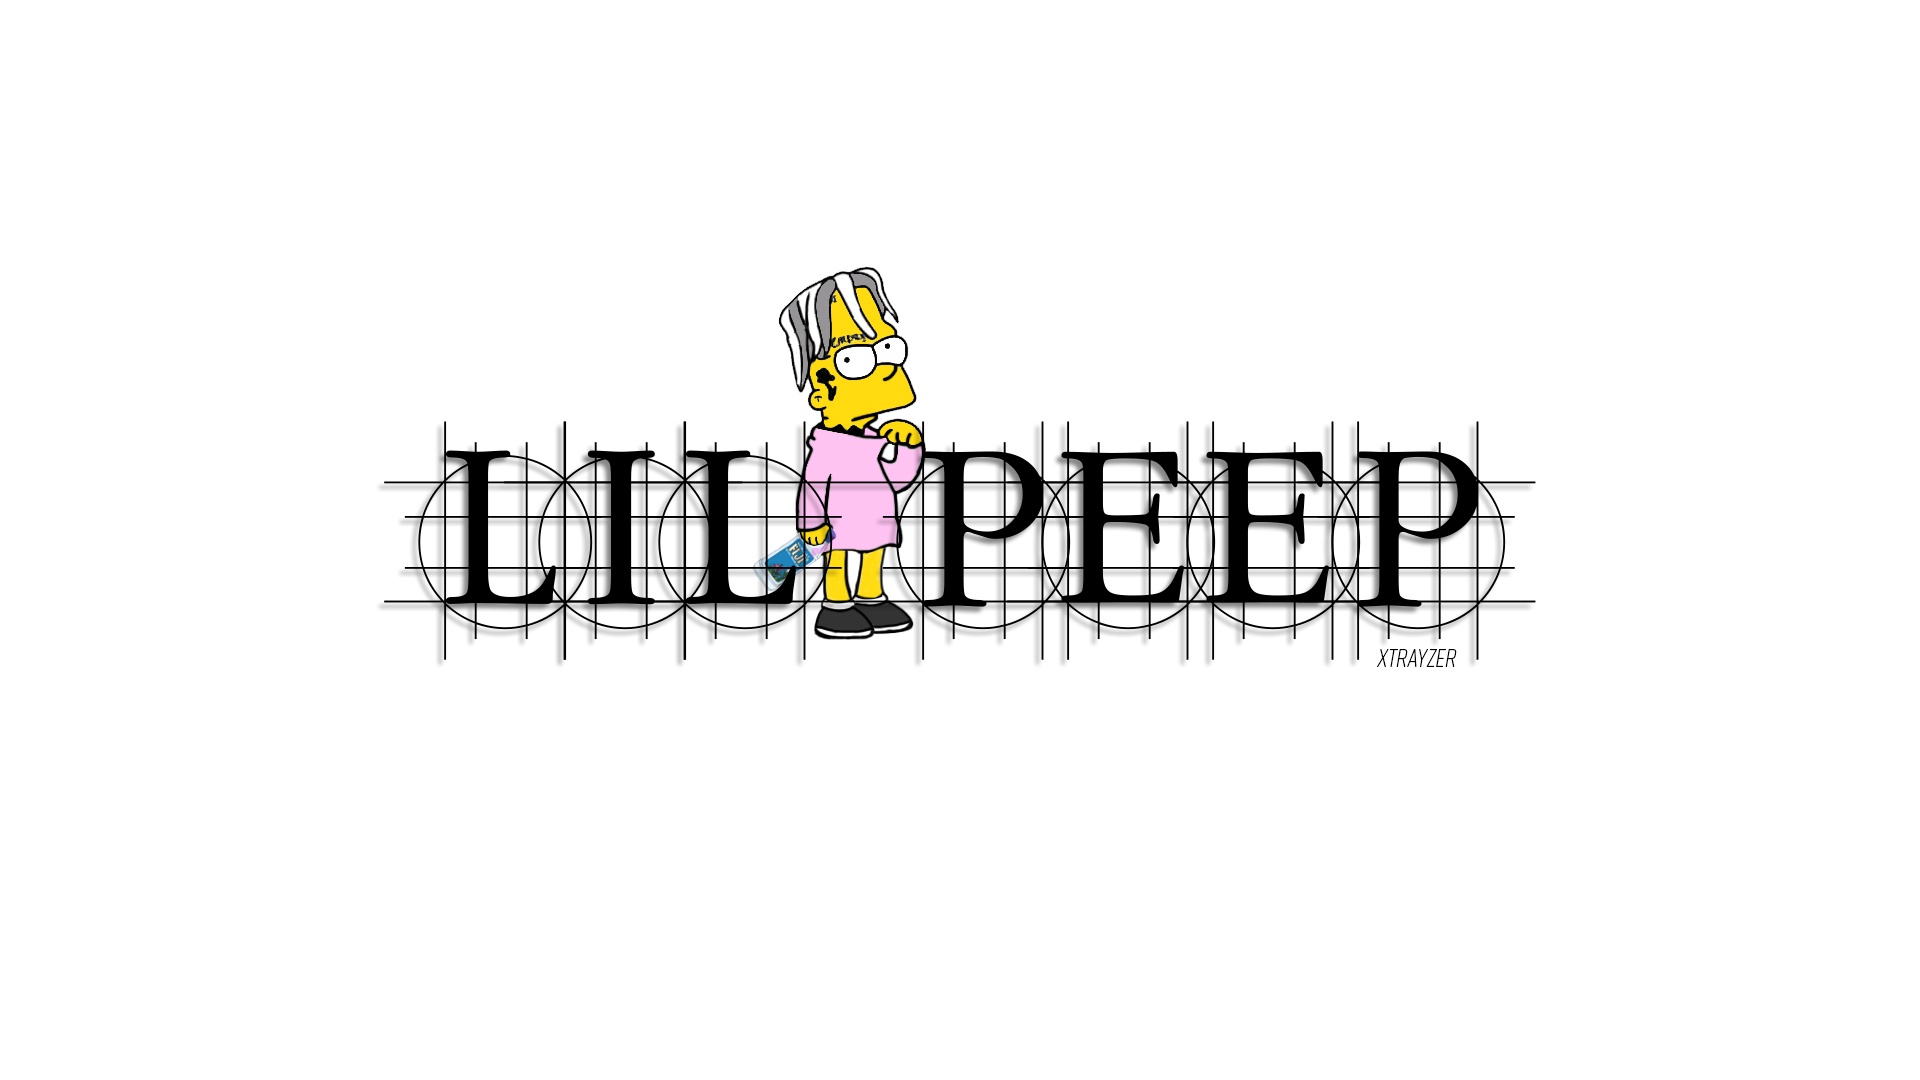 Lil Peep Wallpaper By Xtrayzer On Deviantart.jpg cool background